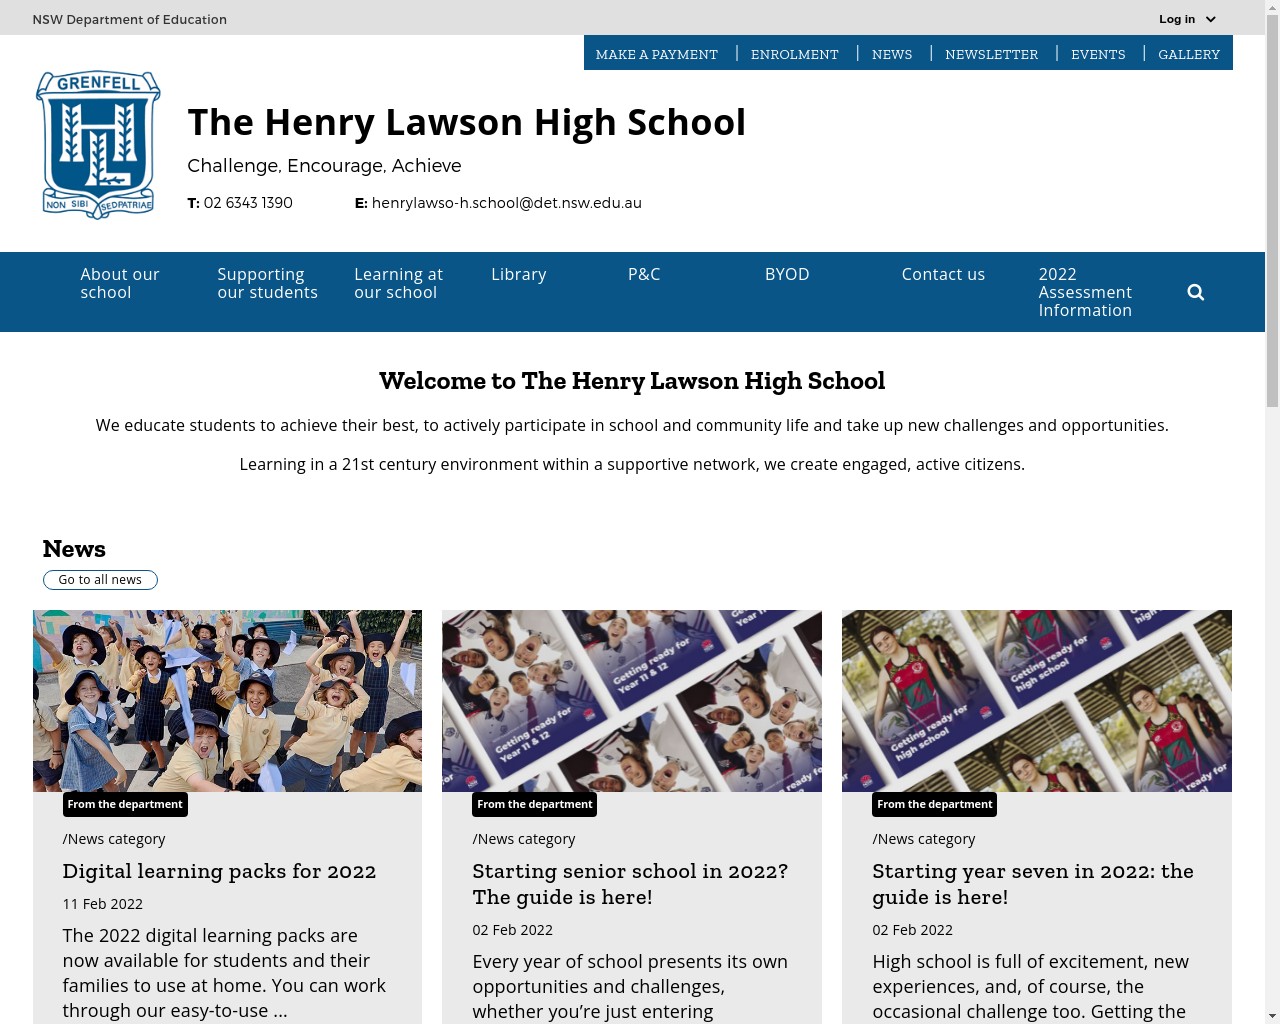 The Henry Lawson High School